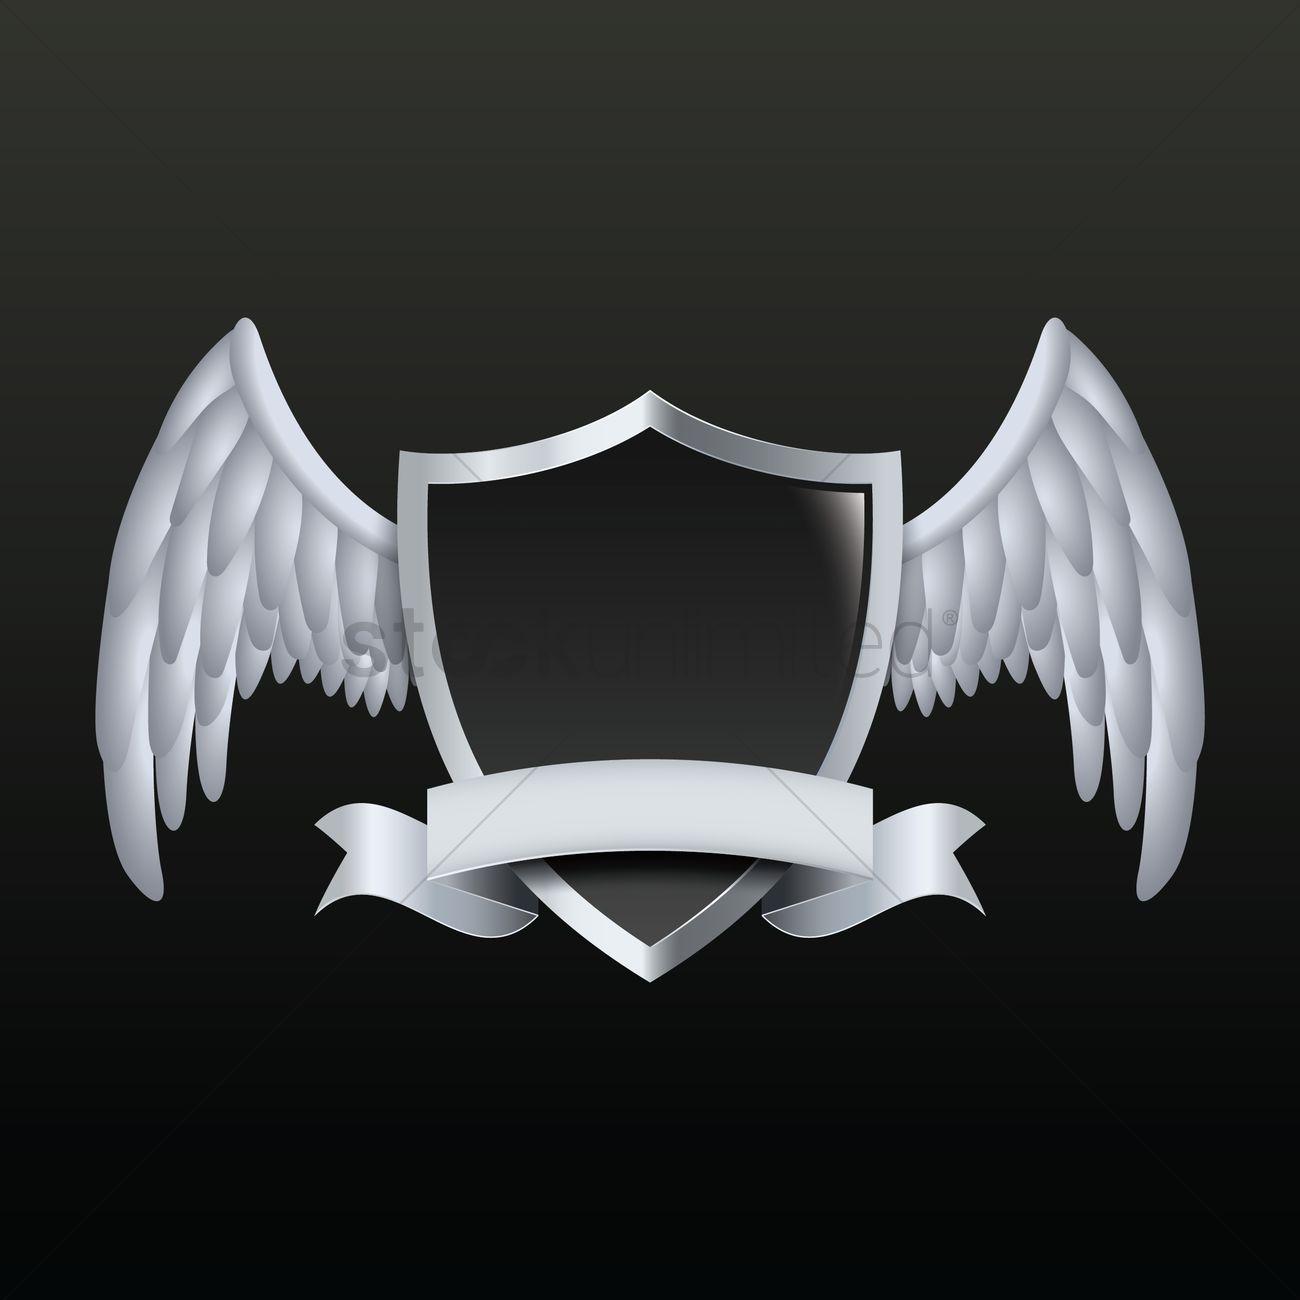 Steel Shield Logo - Shield emblem Vector Image - 1873214 | StockUnlimited